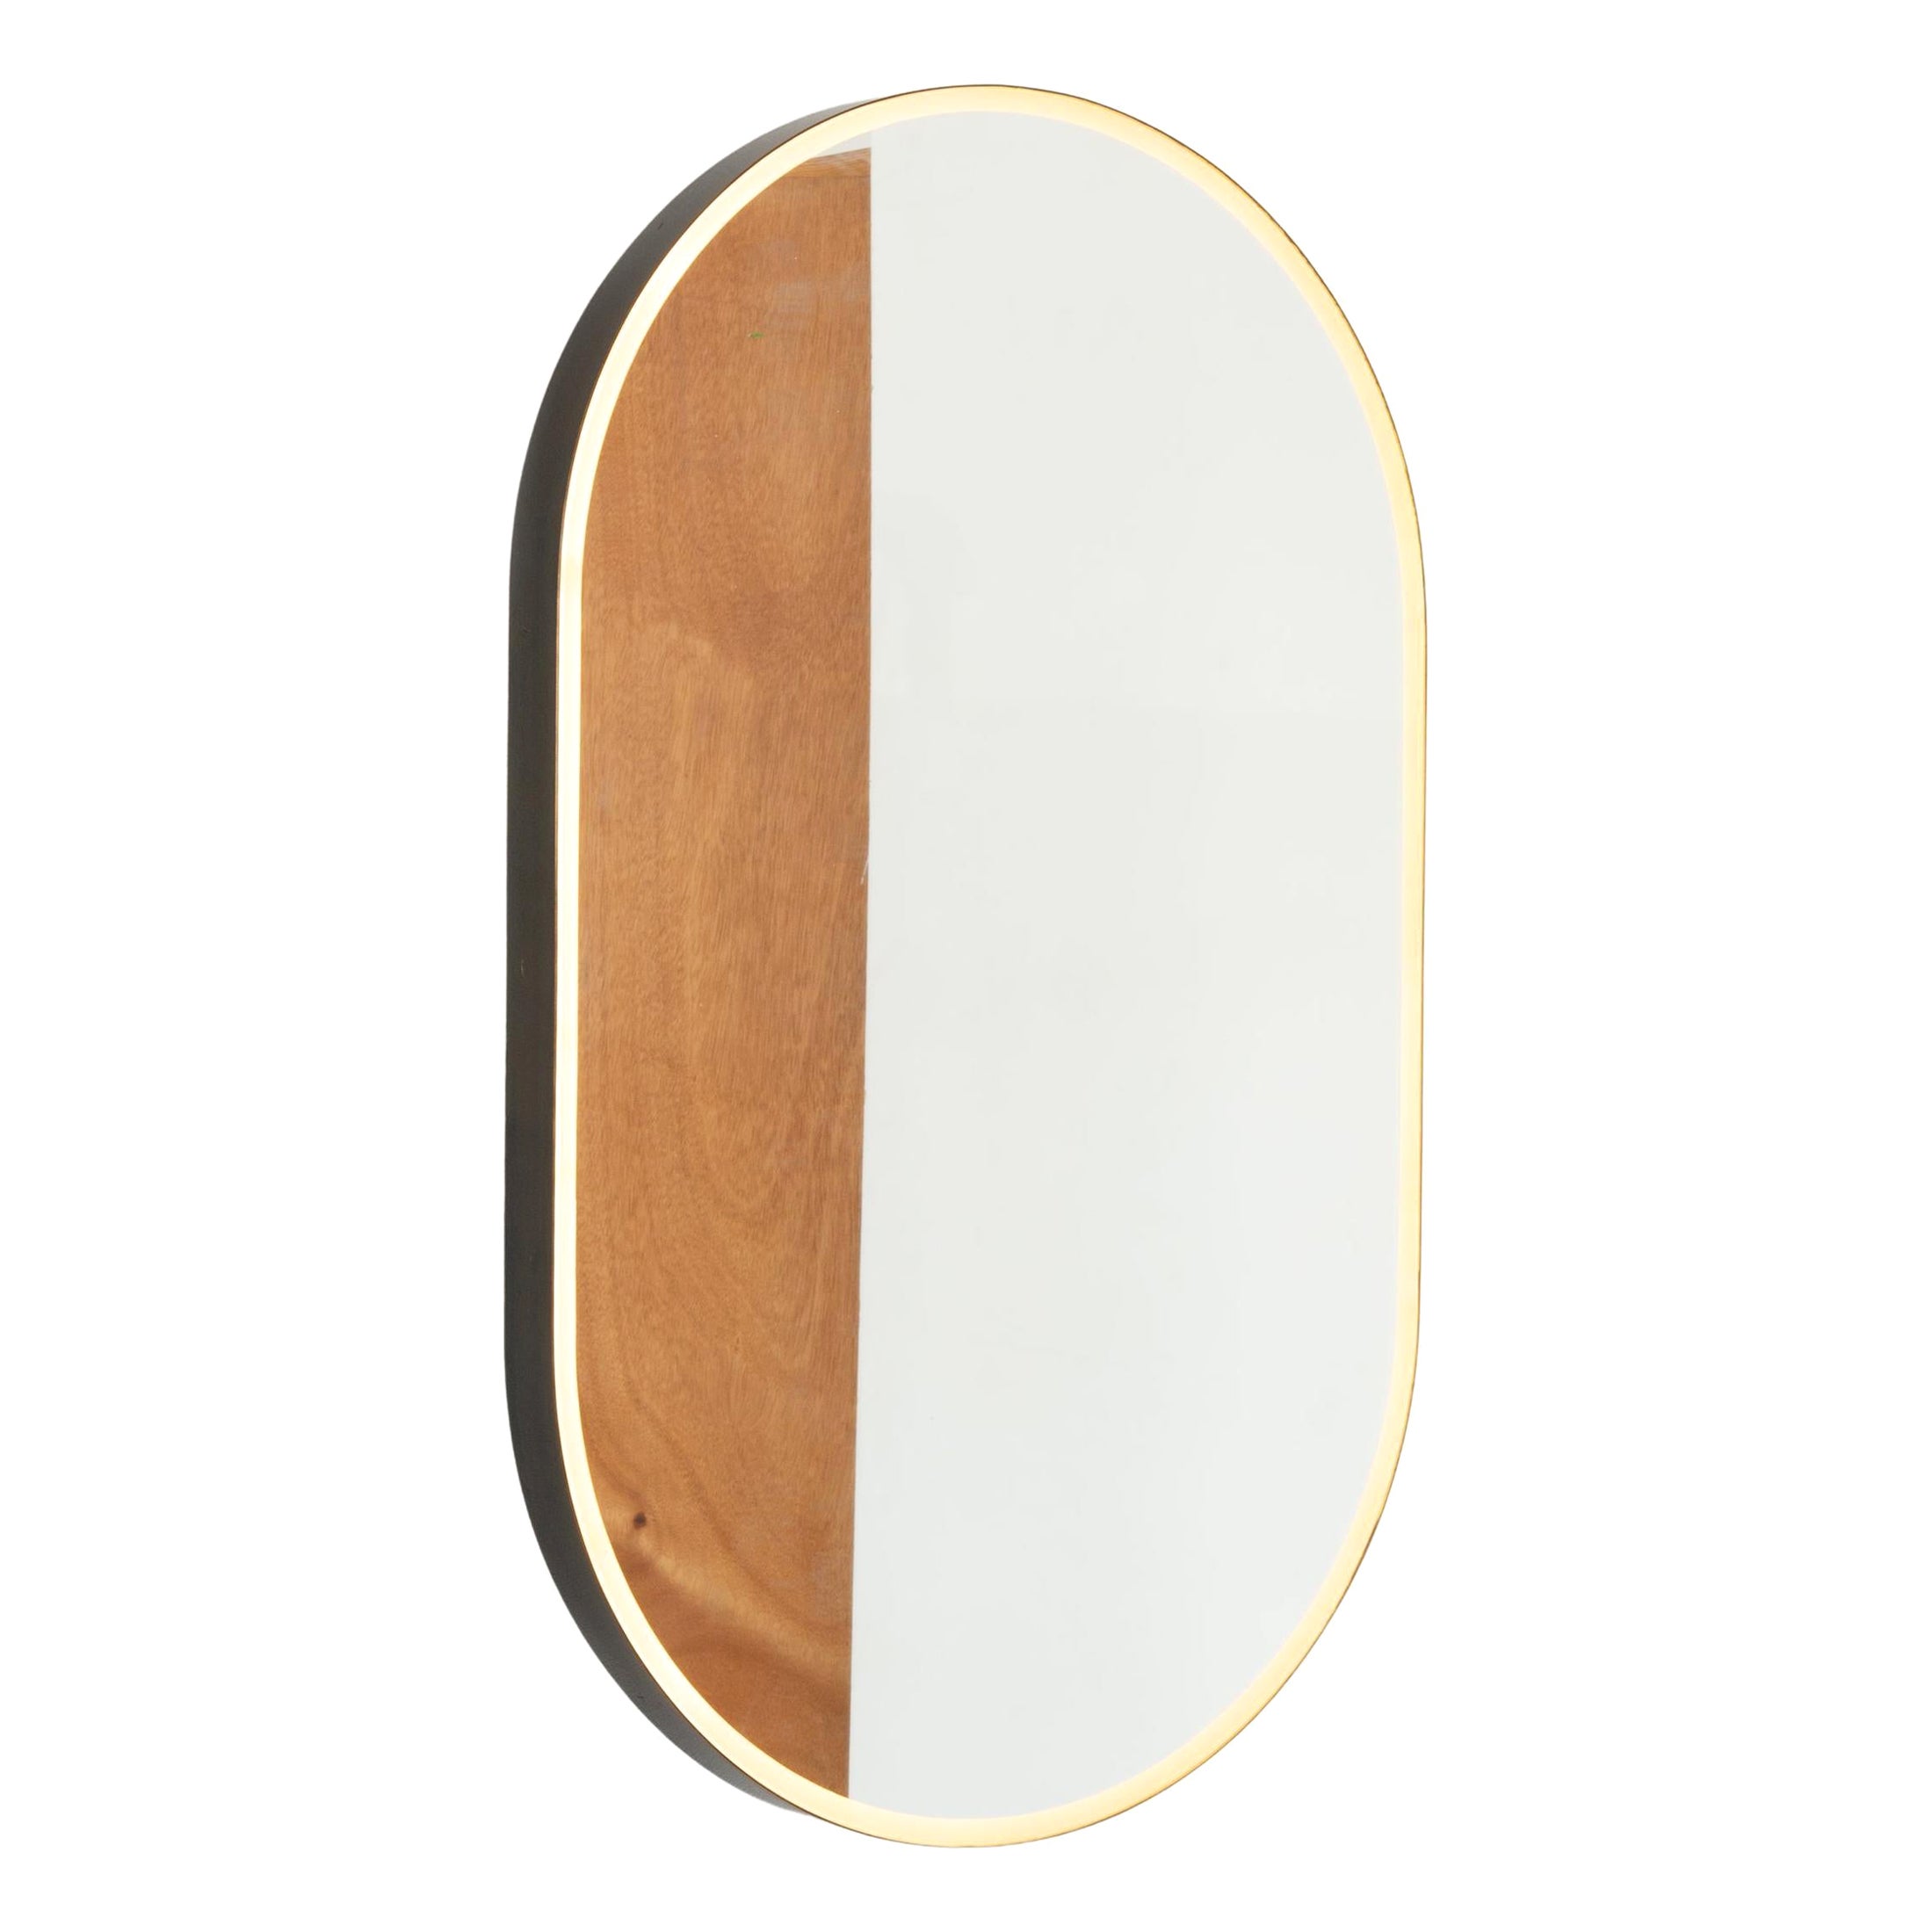 Capsula Illuminated Pill Shaped Mirror with Bronze Patina Frame, Medium For Sale